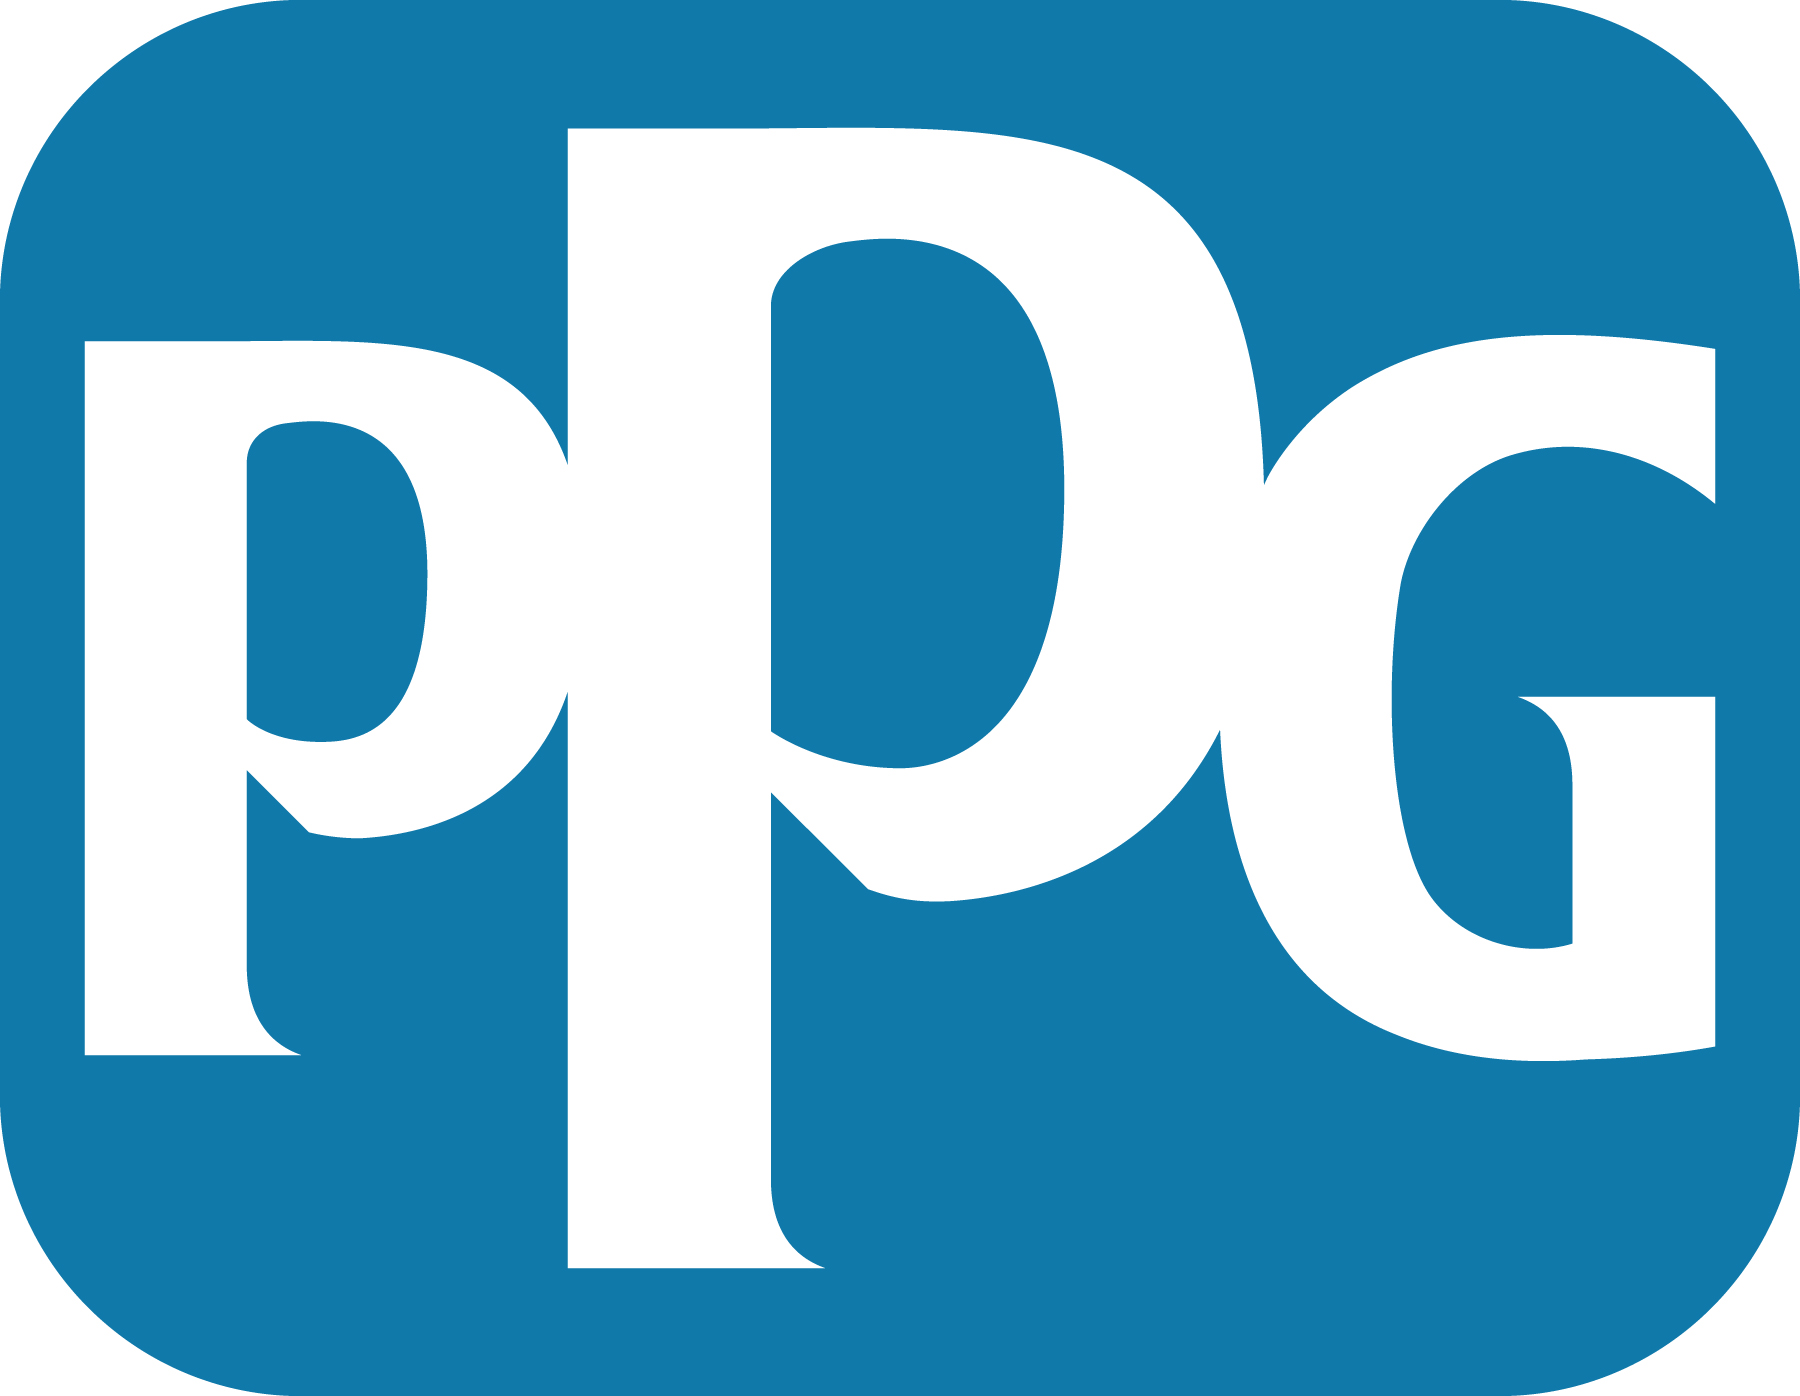 PPG logos final 2 for testing